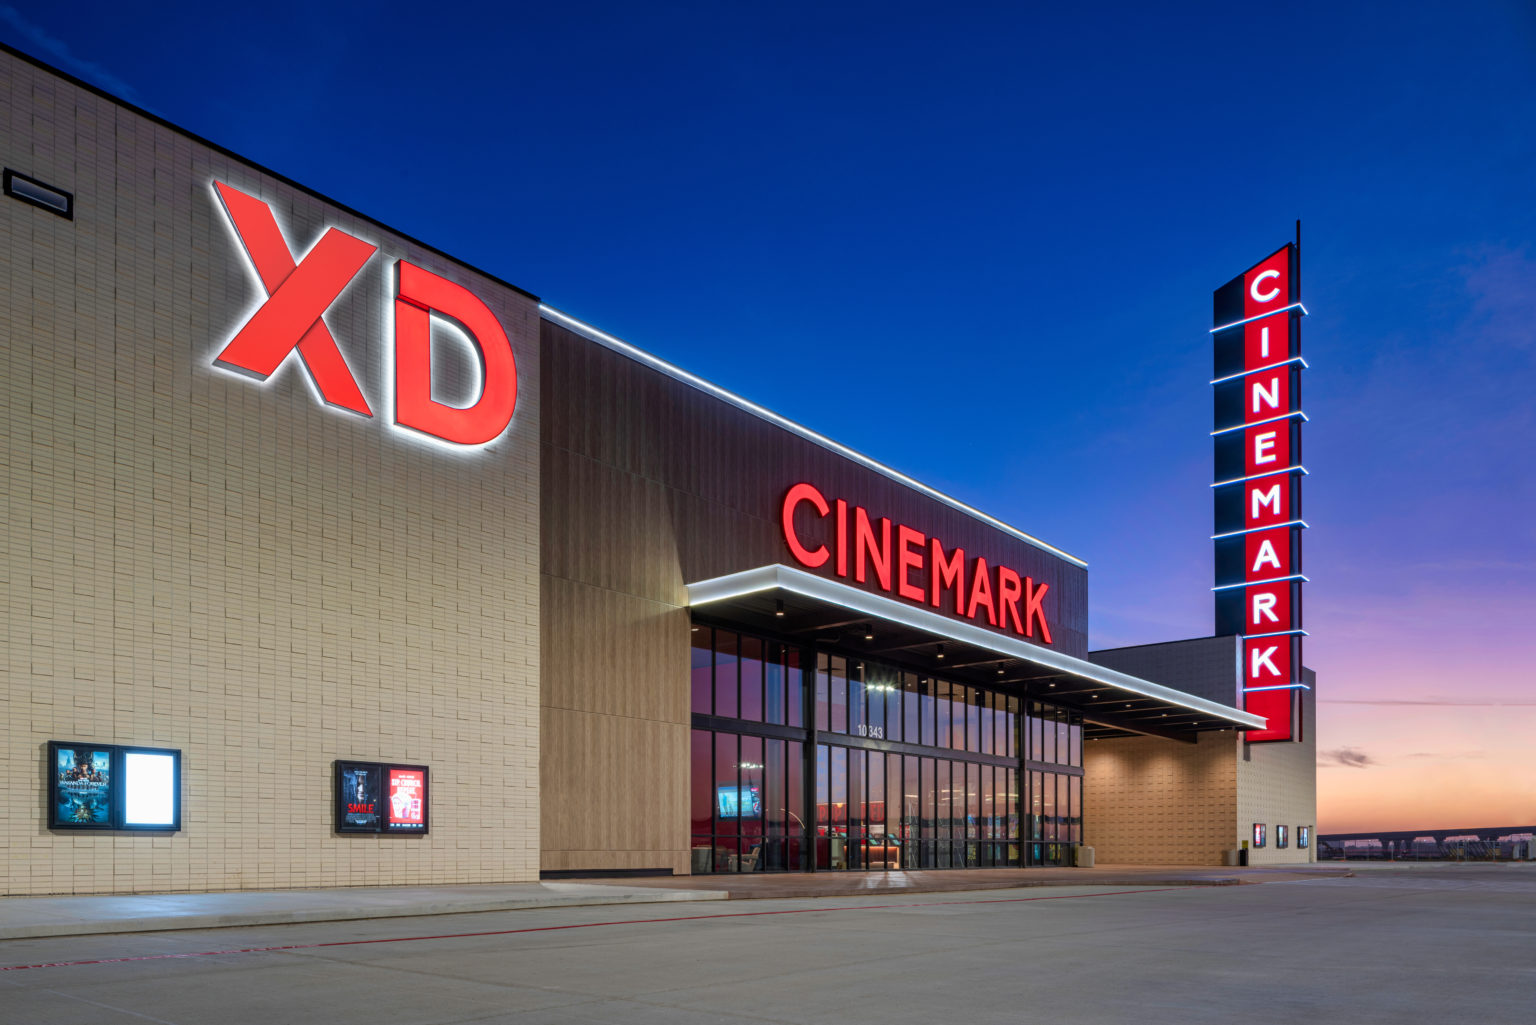 Cinemark Opens Missouri City, Texas Location Showcasing New Design